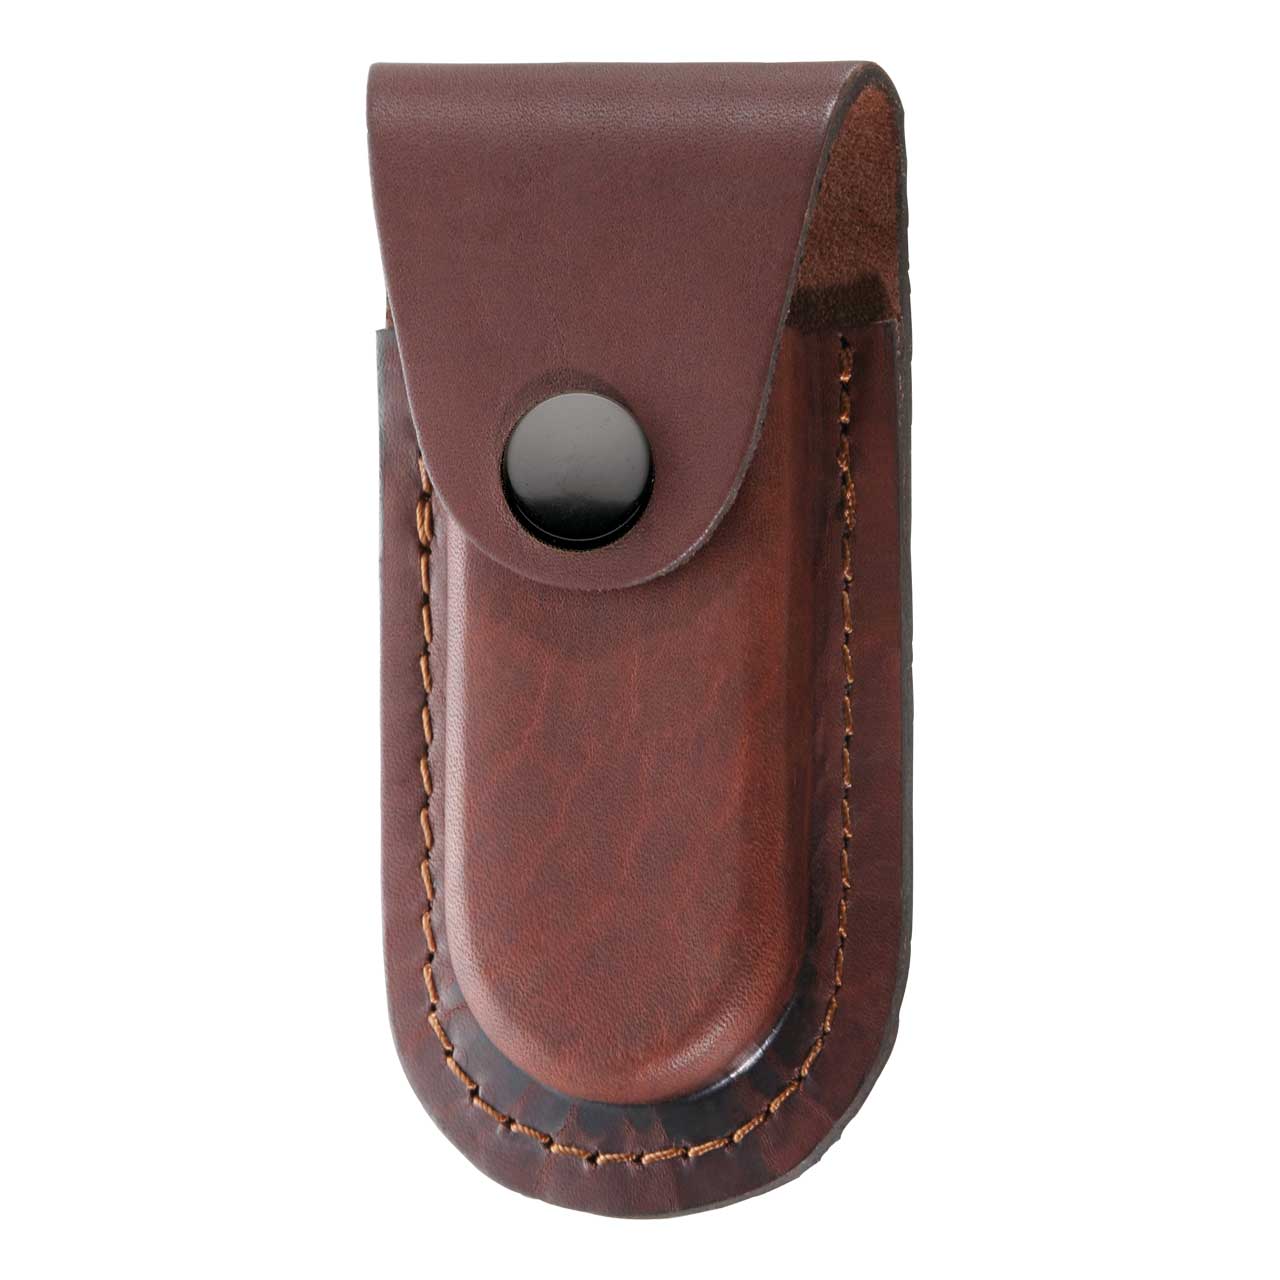 Picture of Herbertz - Leather Case 2675120 Brown for Stapler Length 12 cm